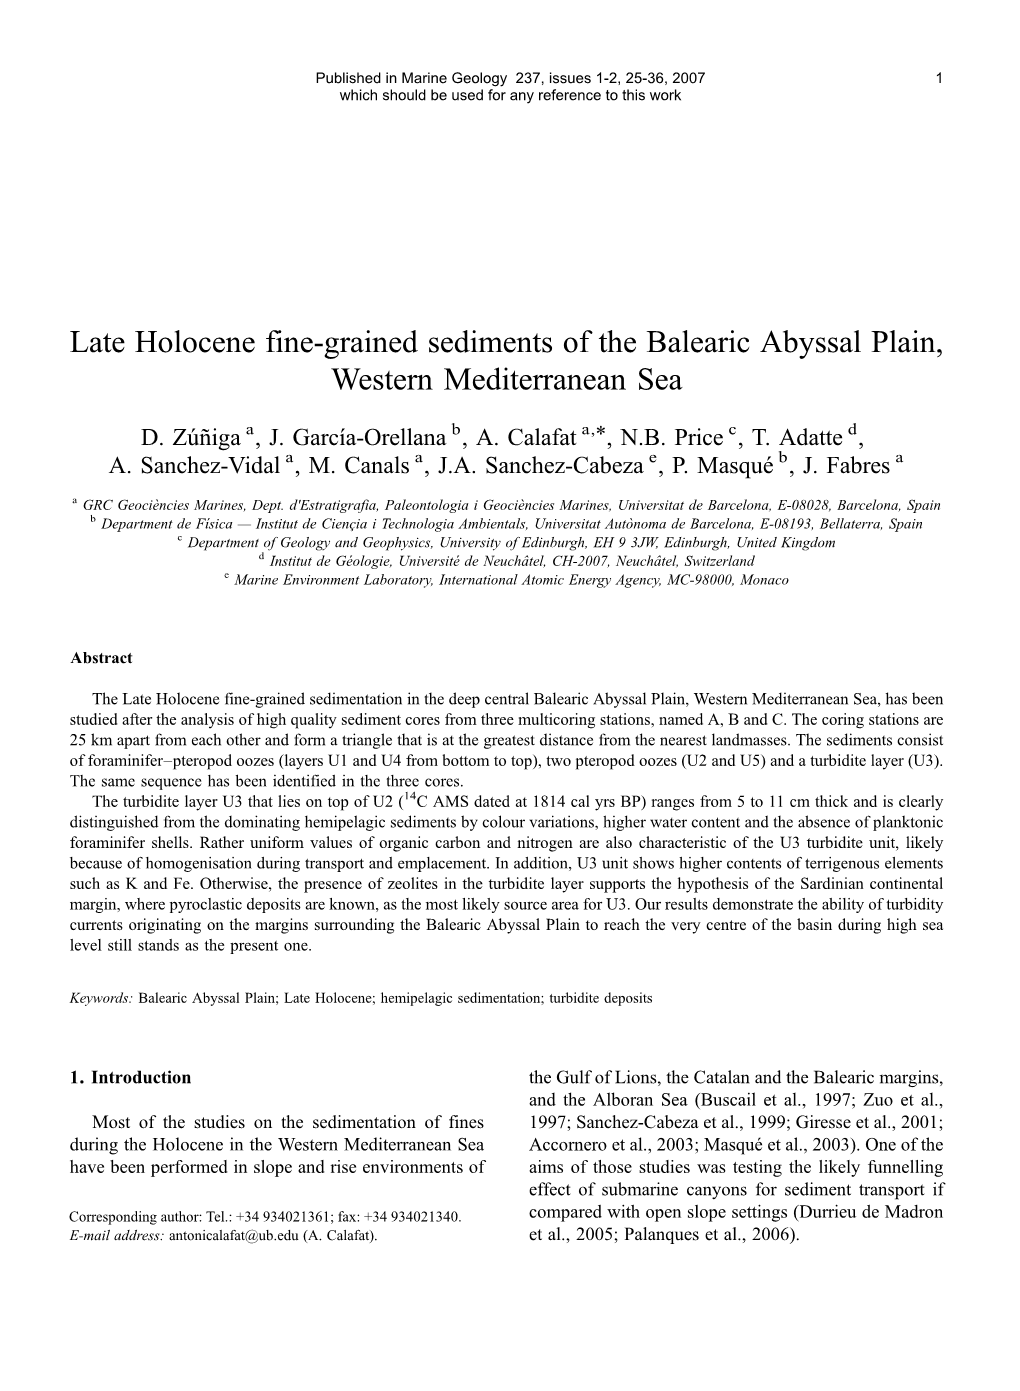 Late Holocene Fine-Grained Sediments of the Balearic Abyssal Plain, Western Mediterranean Sea ⁎ D